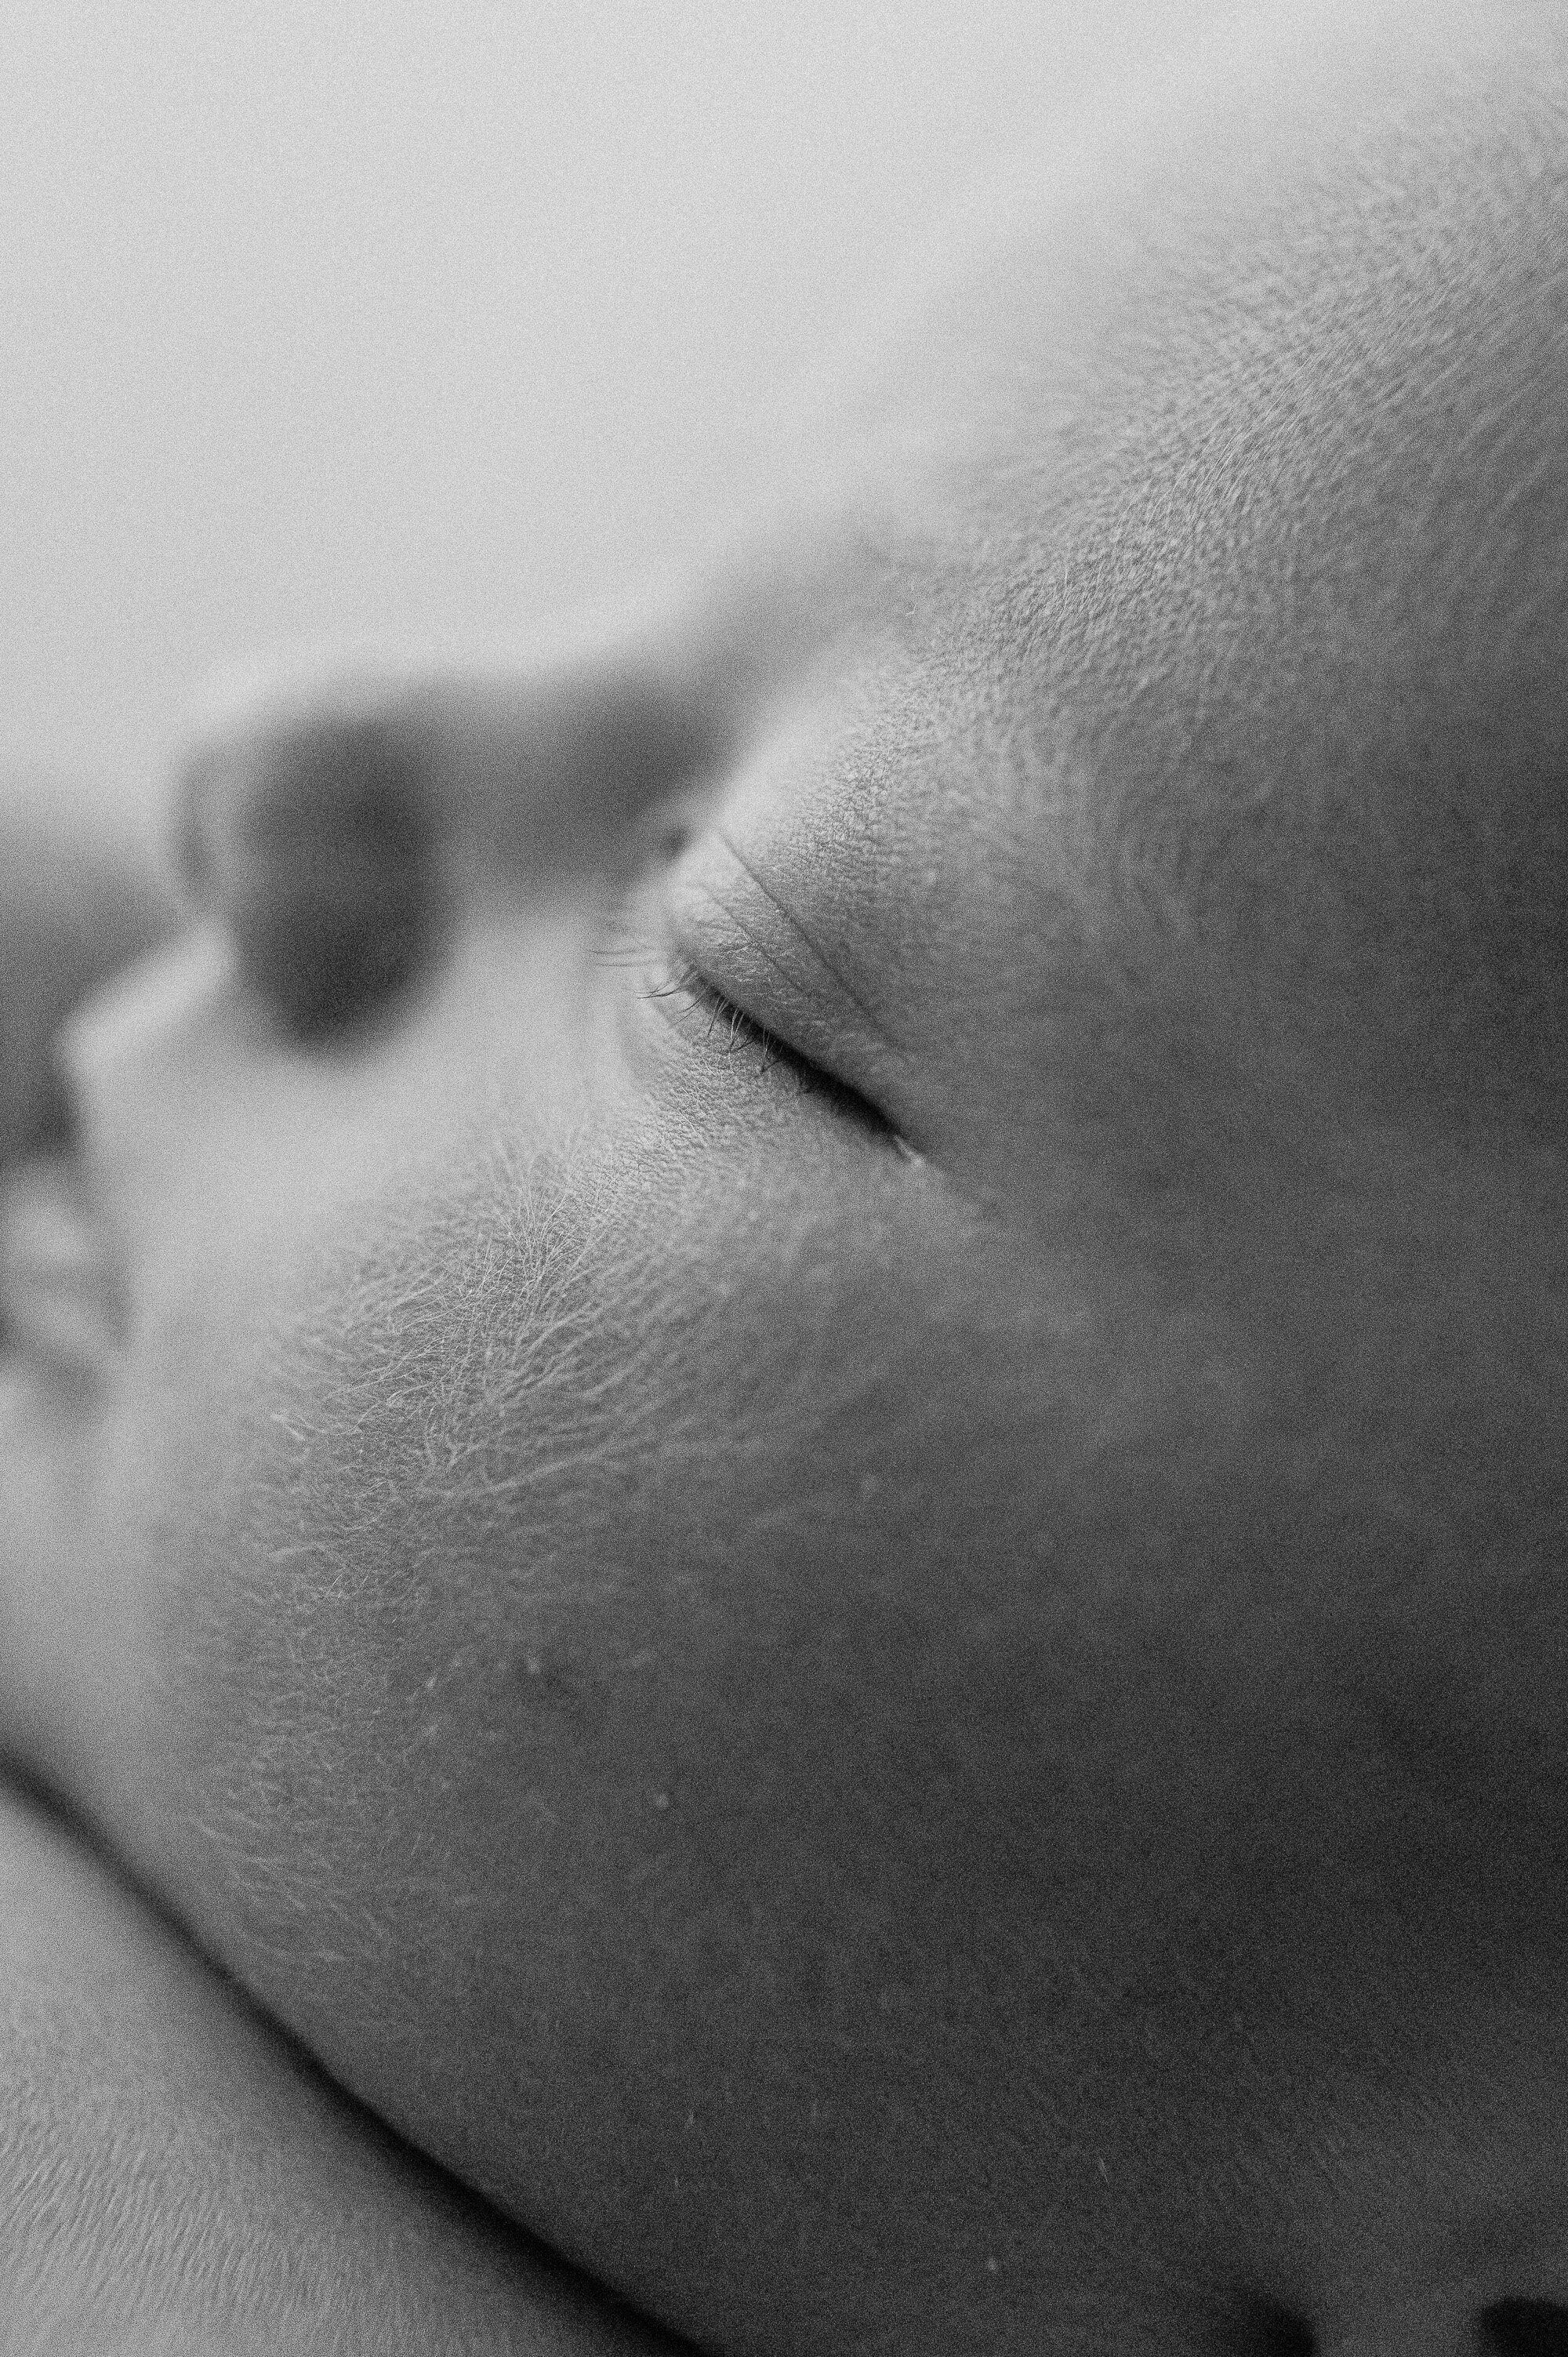 newborn baby eyes and cheeks, taken by York based newborn and maternity photographer